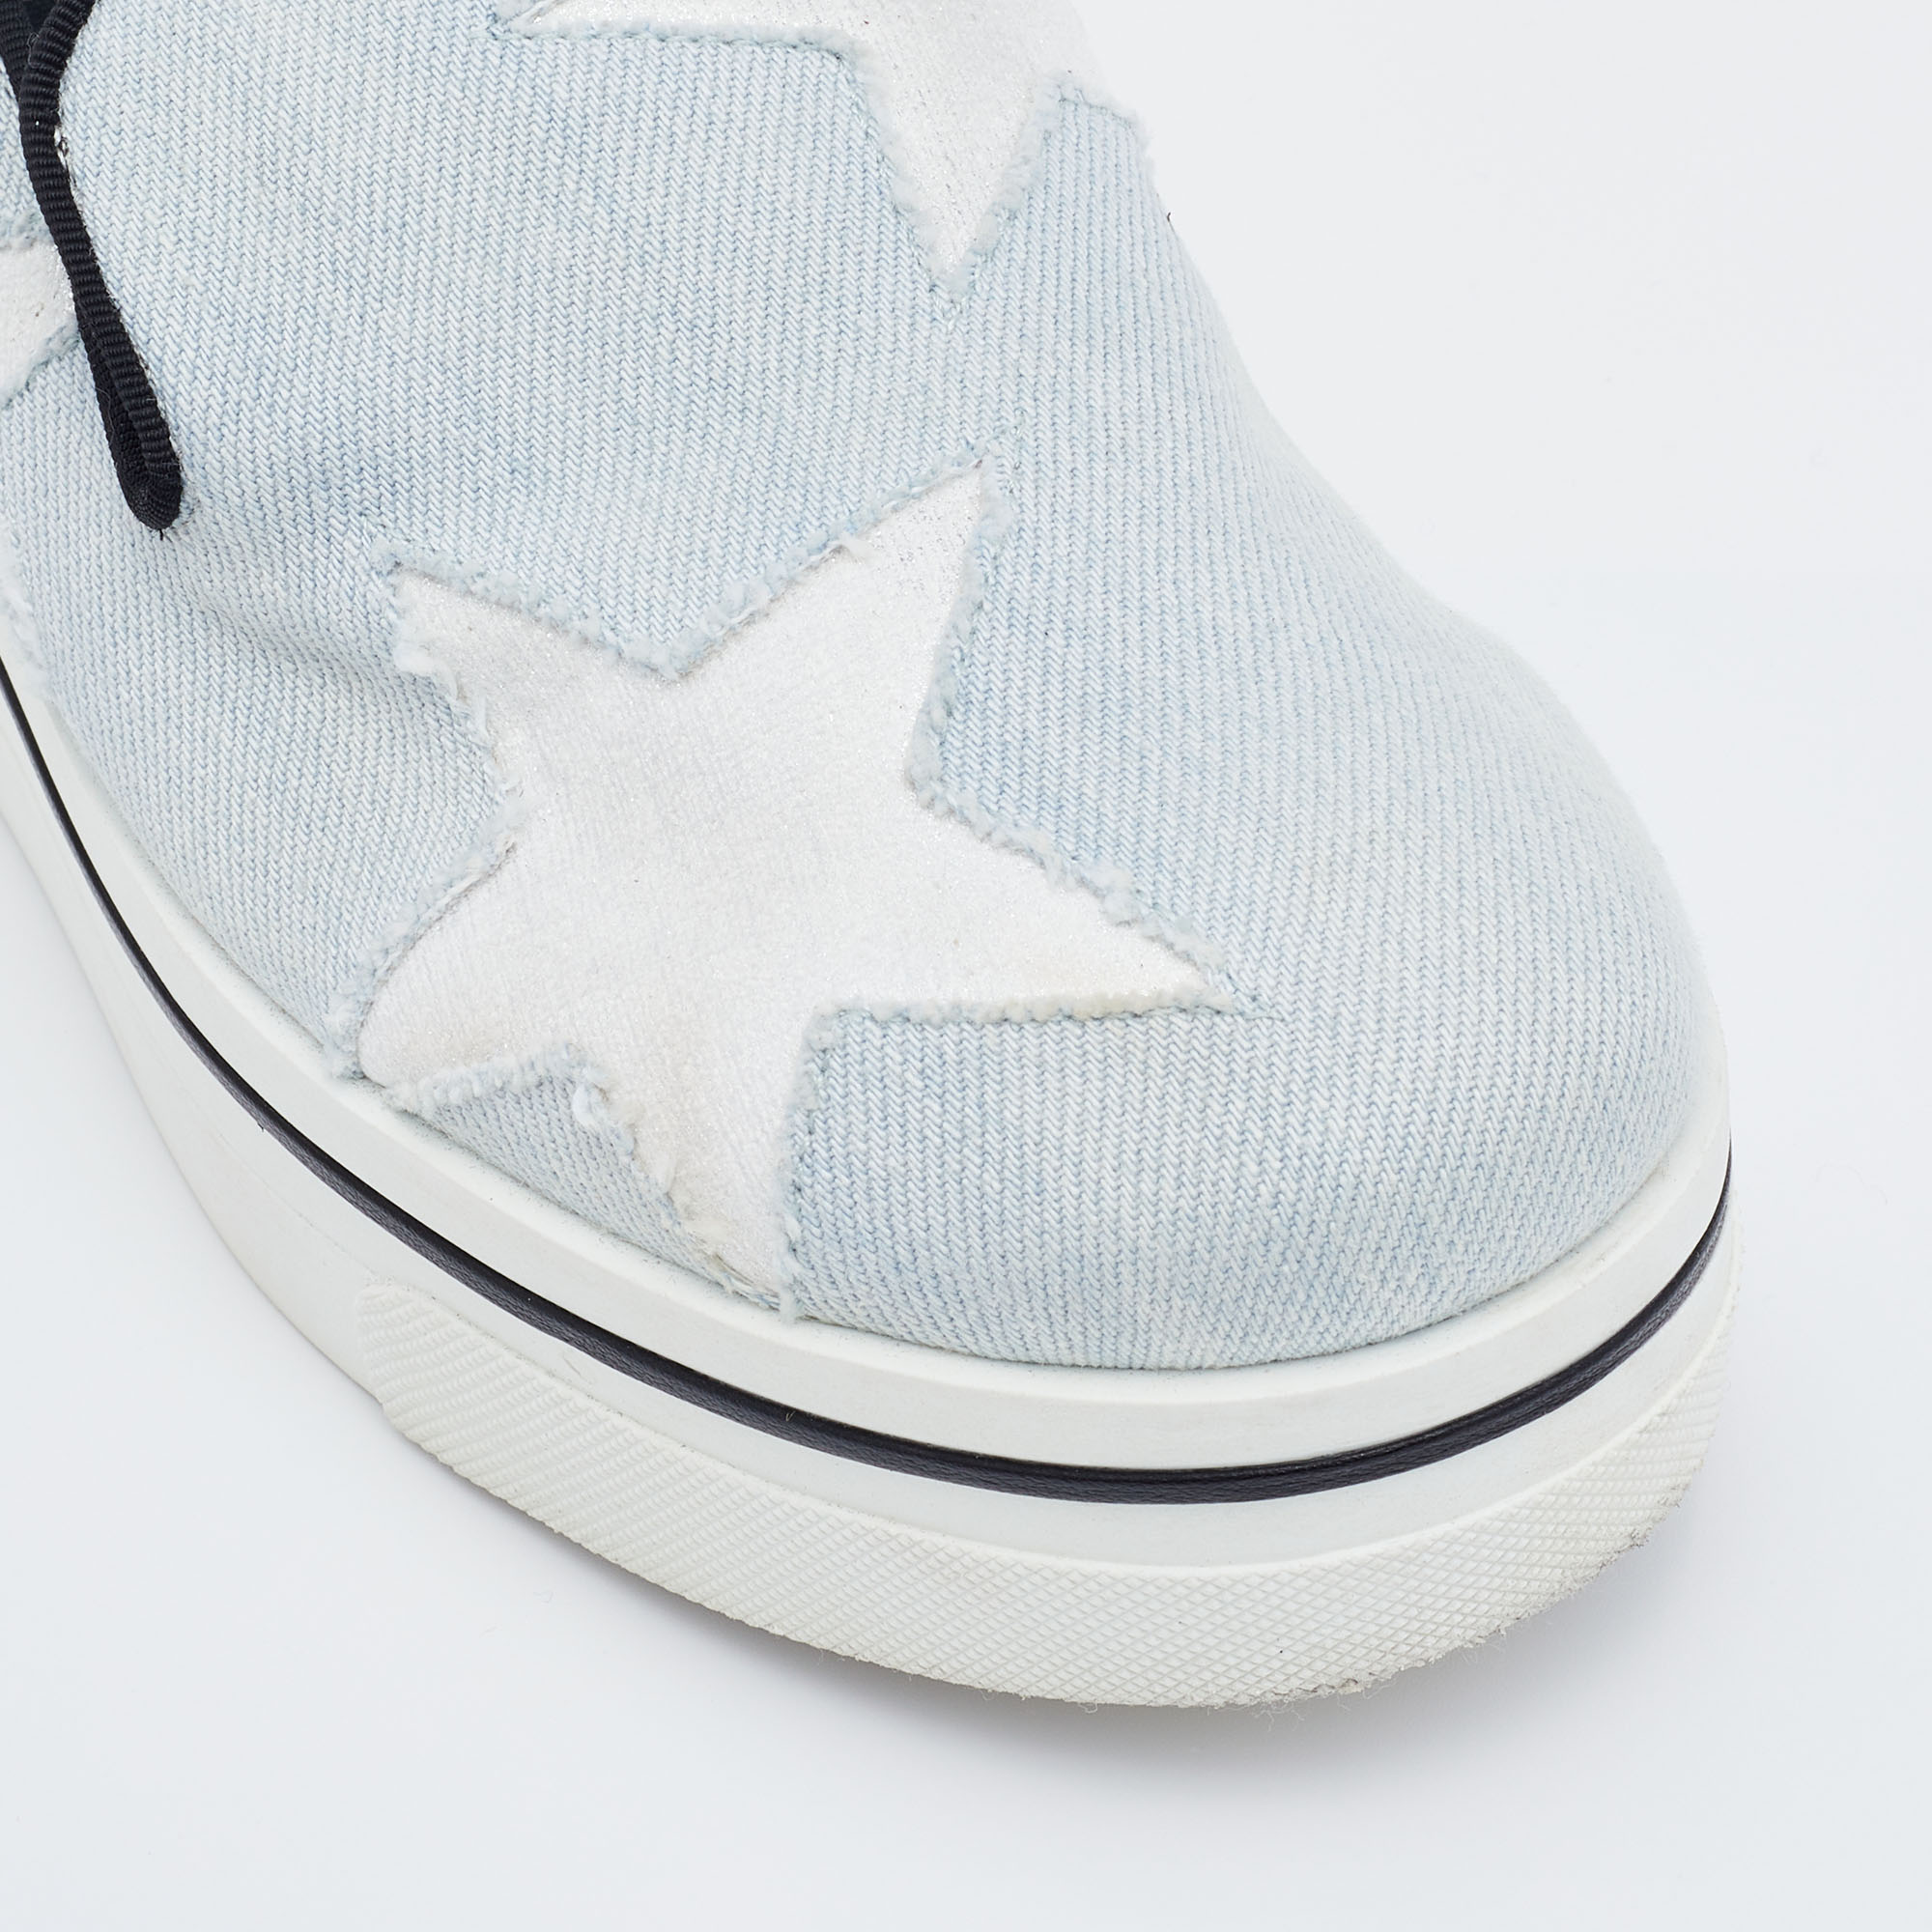 Stella McCartney Light Blue Denim Binx Star Platform Sneakers Size 36